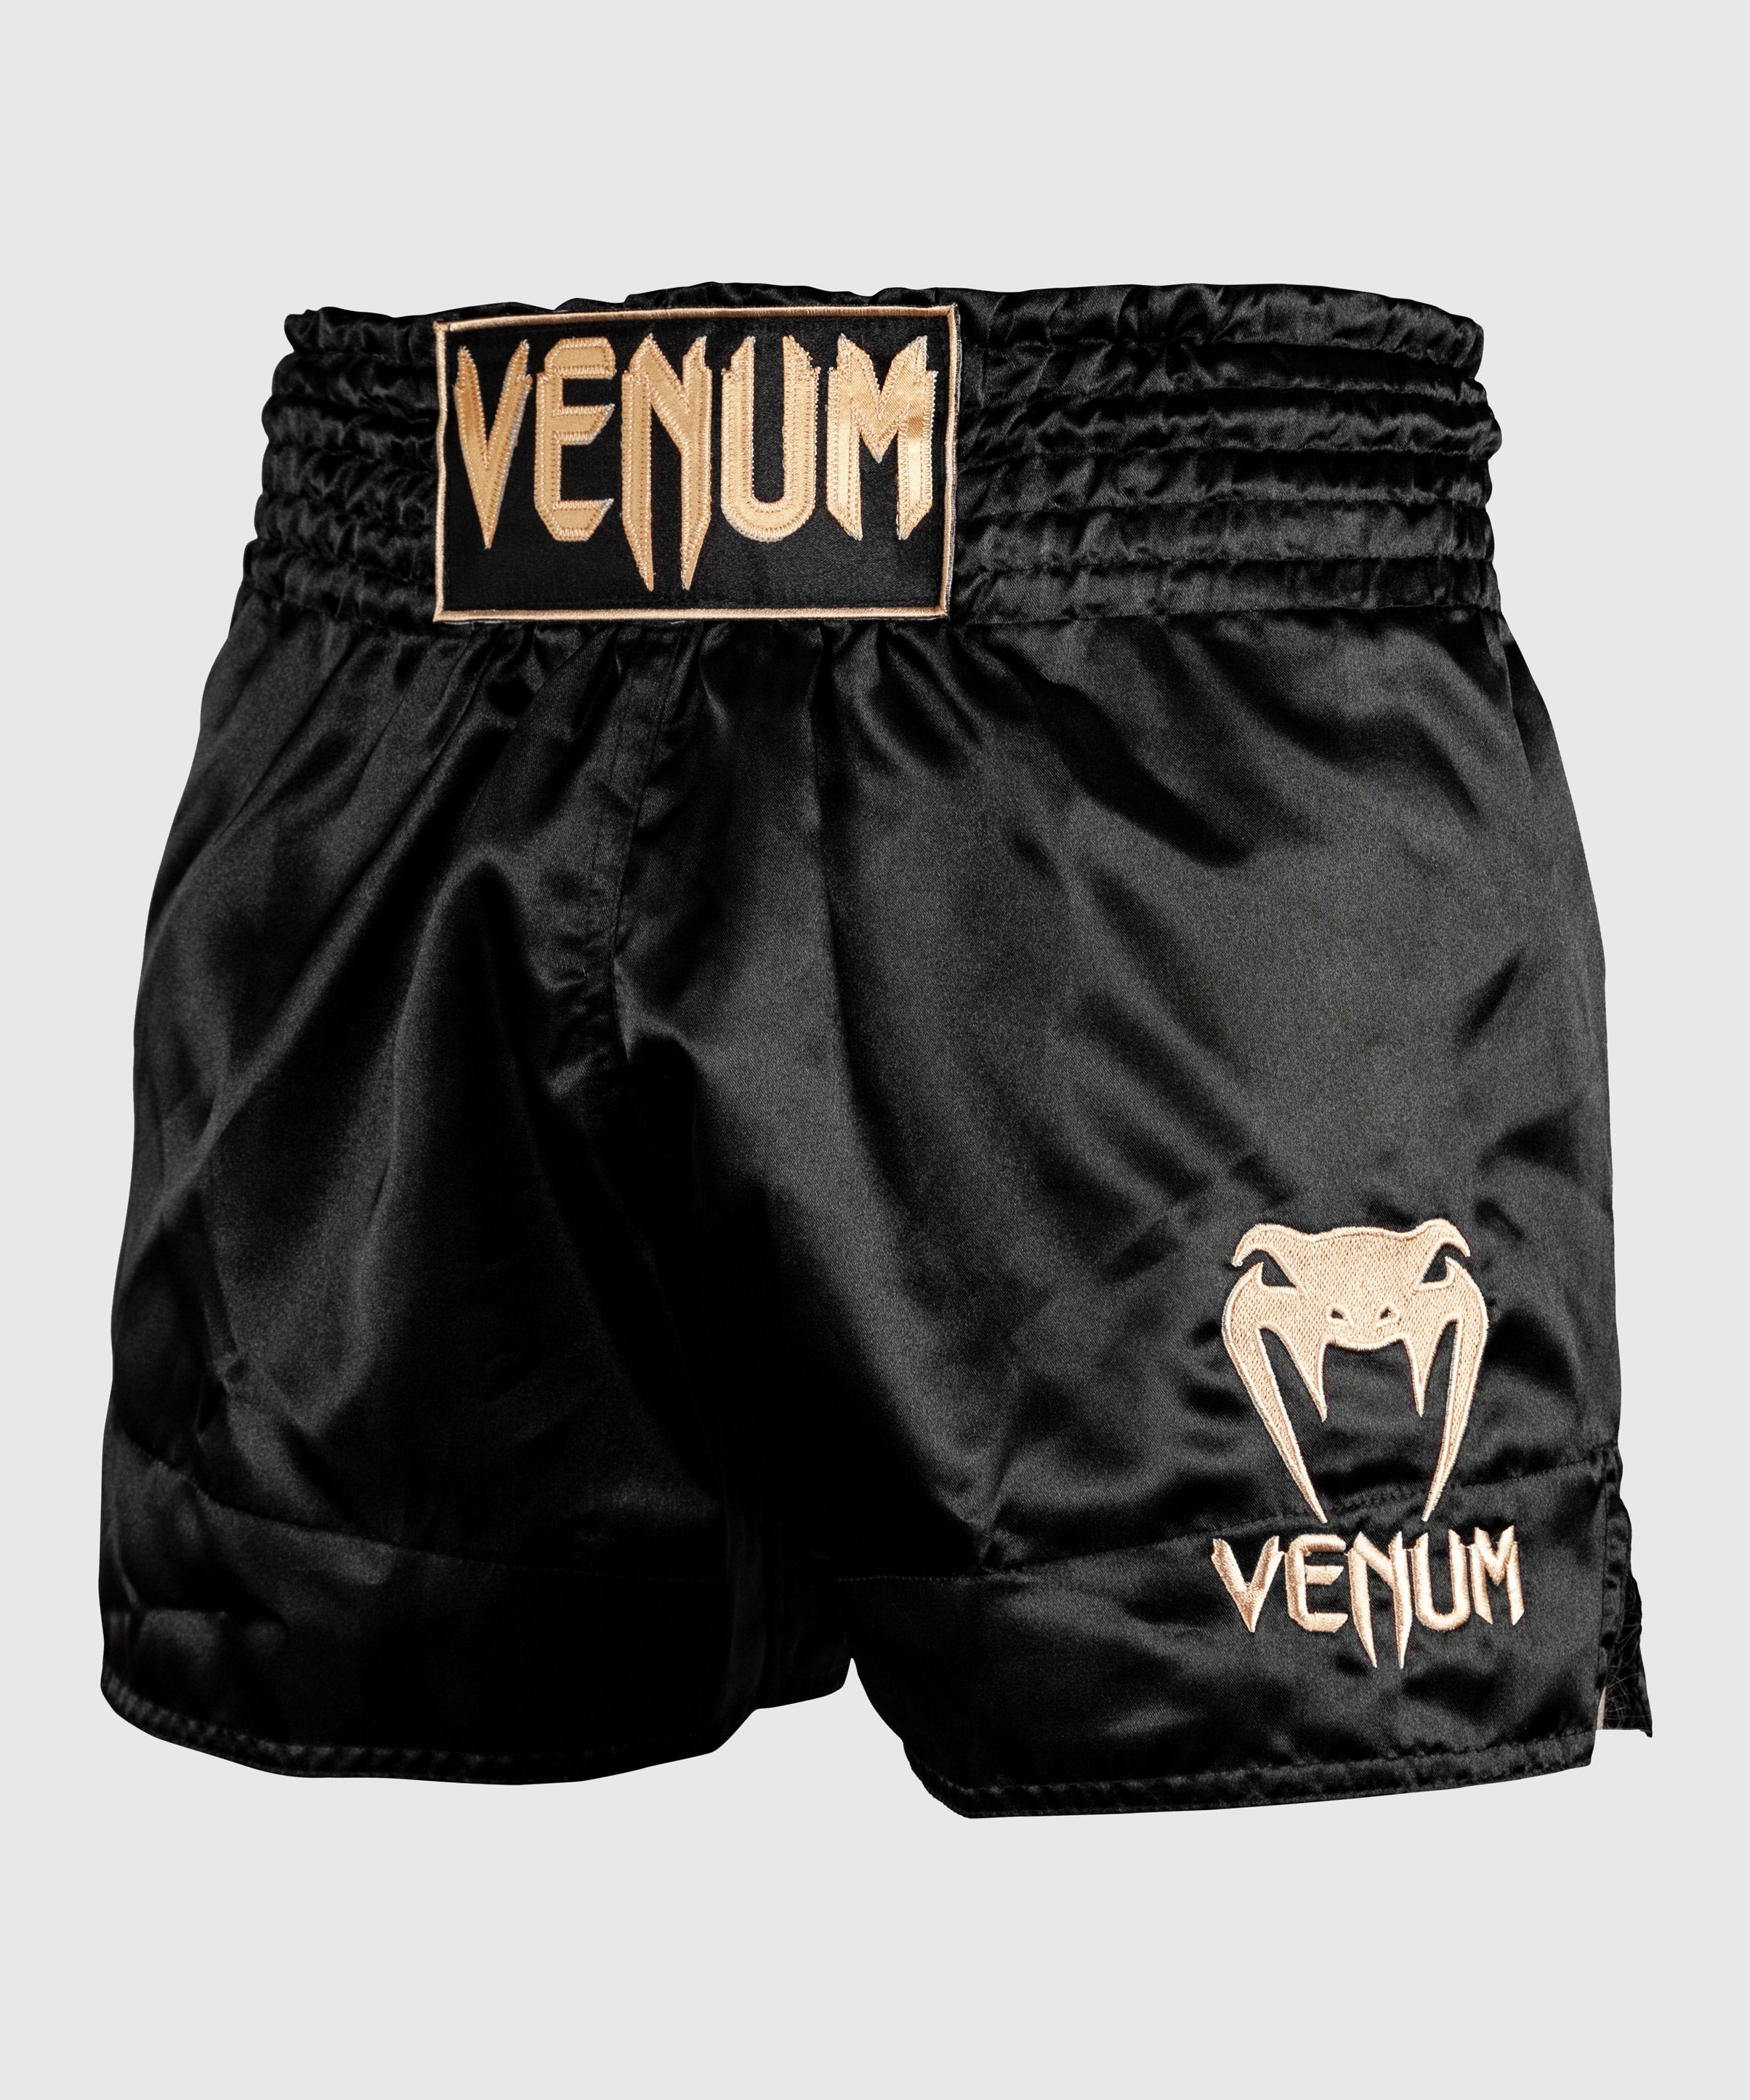 Venum Parachute Muay Thai Shorts - Black Gold - Order Muay Thai Shorts at  Fight Co